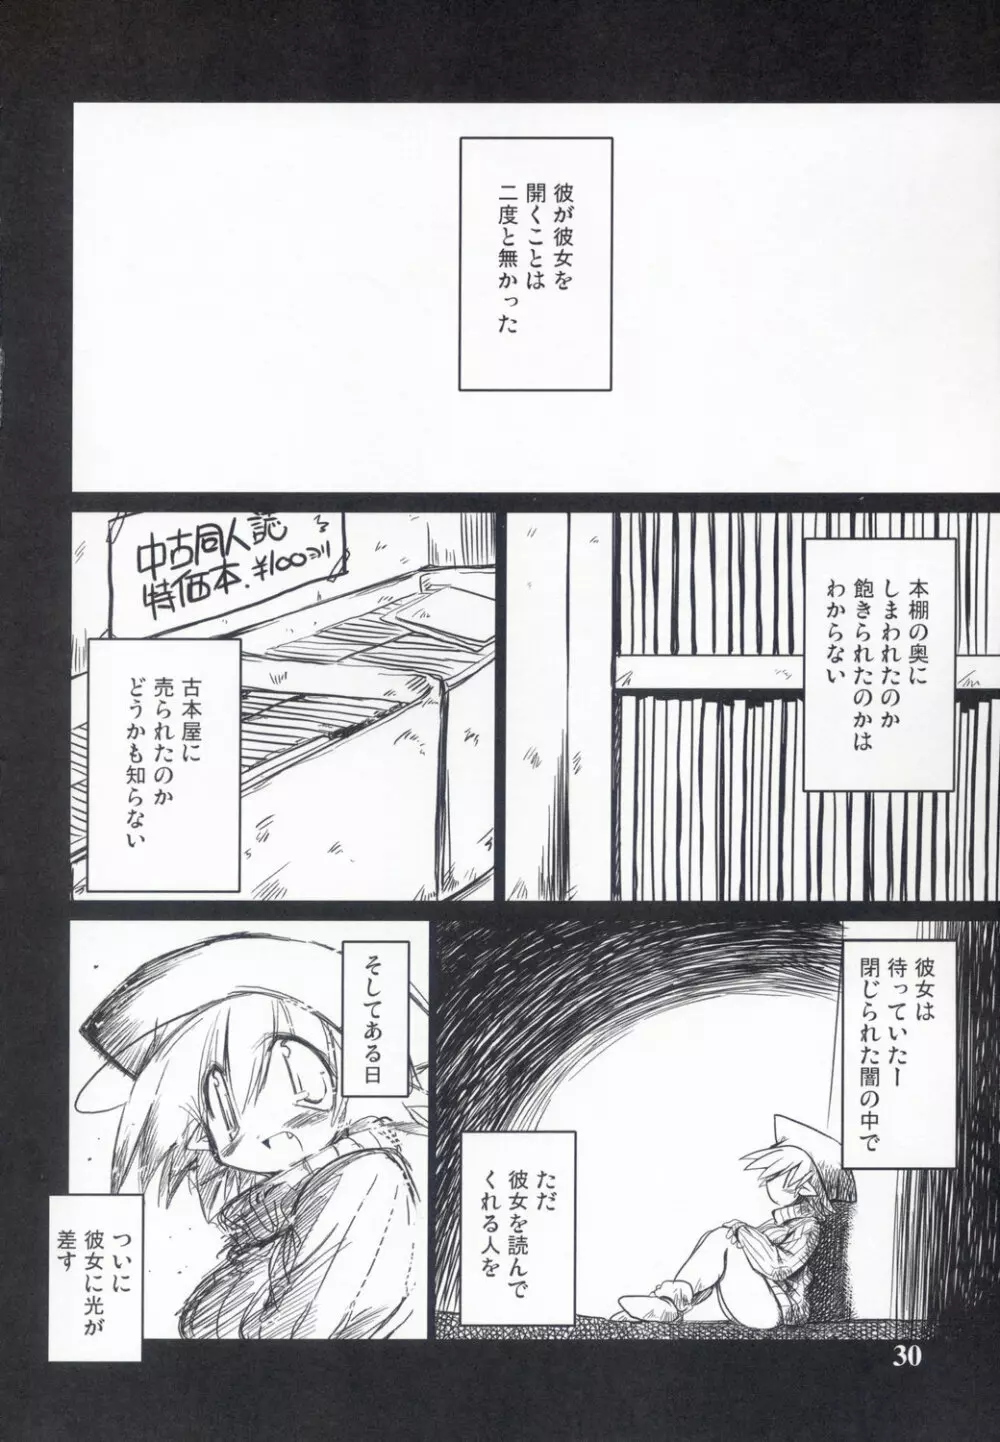 Intermission -同人誌の妖精さん- 30ページ